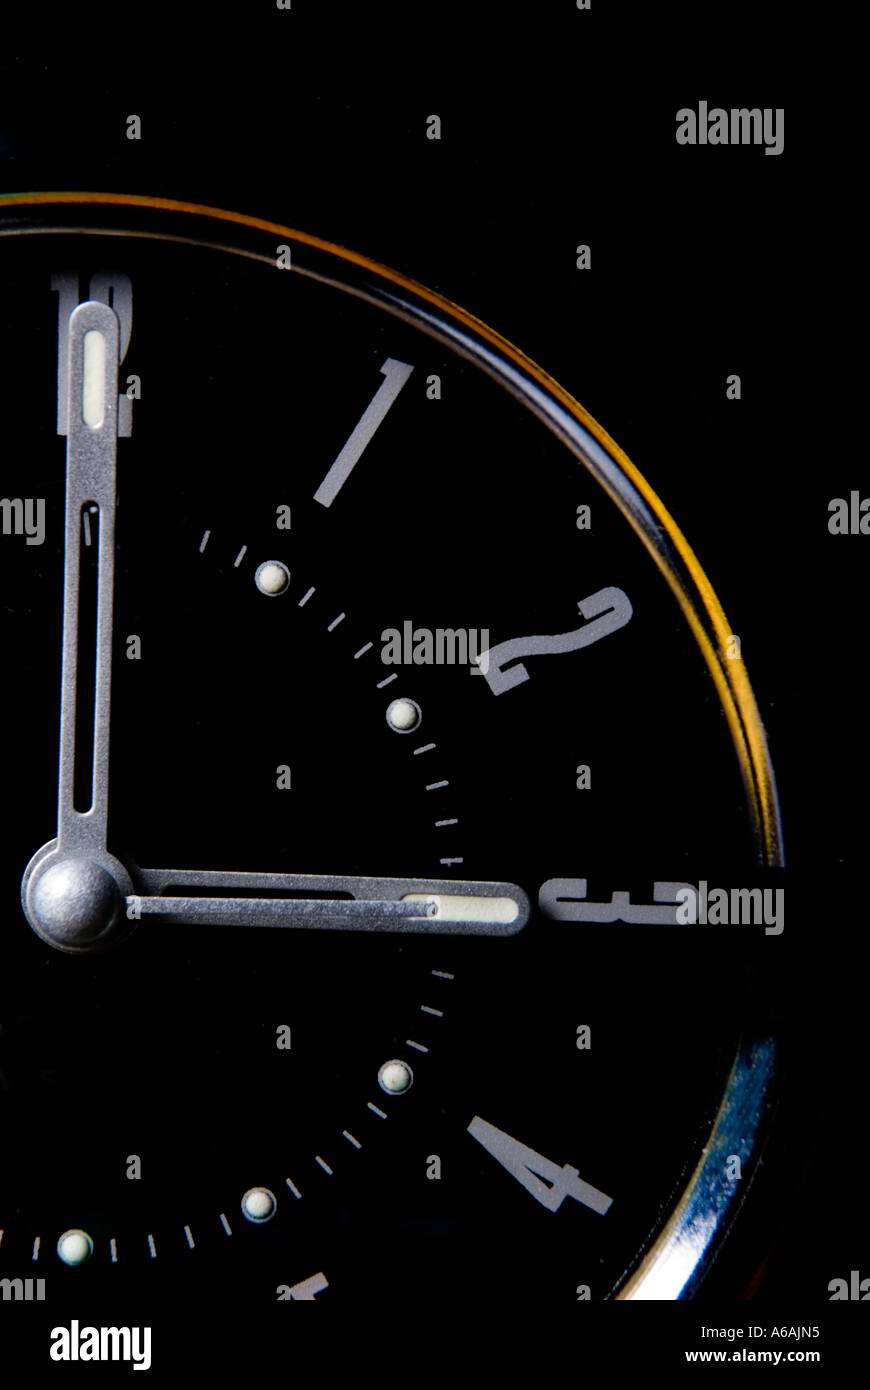 Alarm clock set at three o clock Stock Photo - Alamy